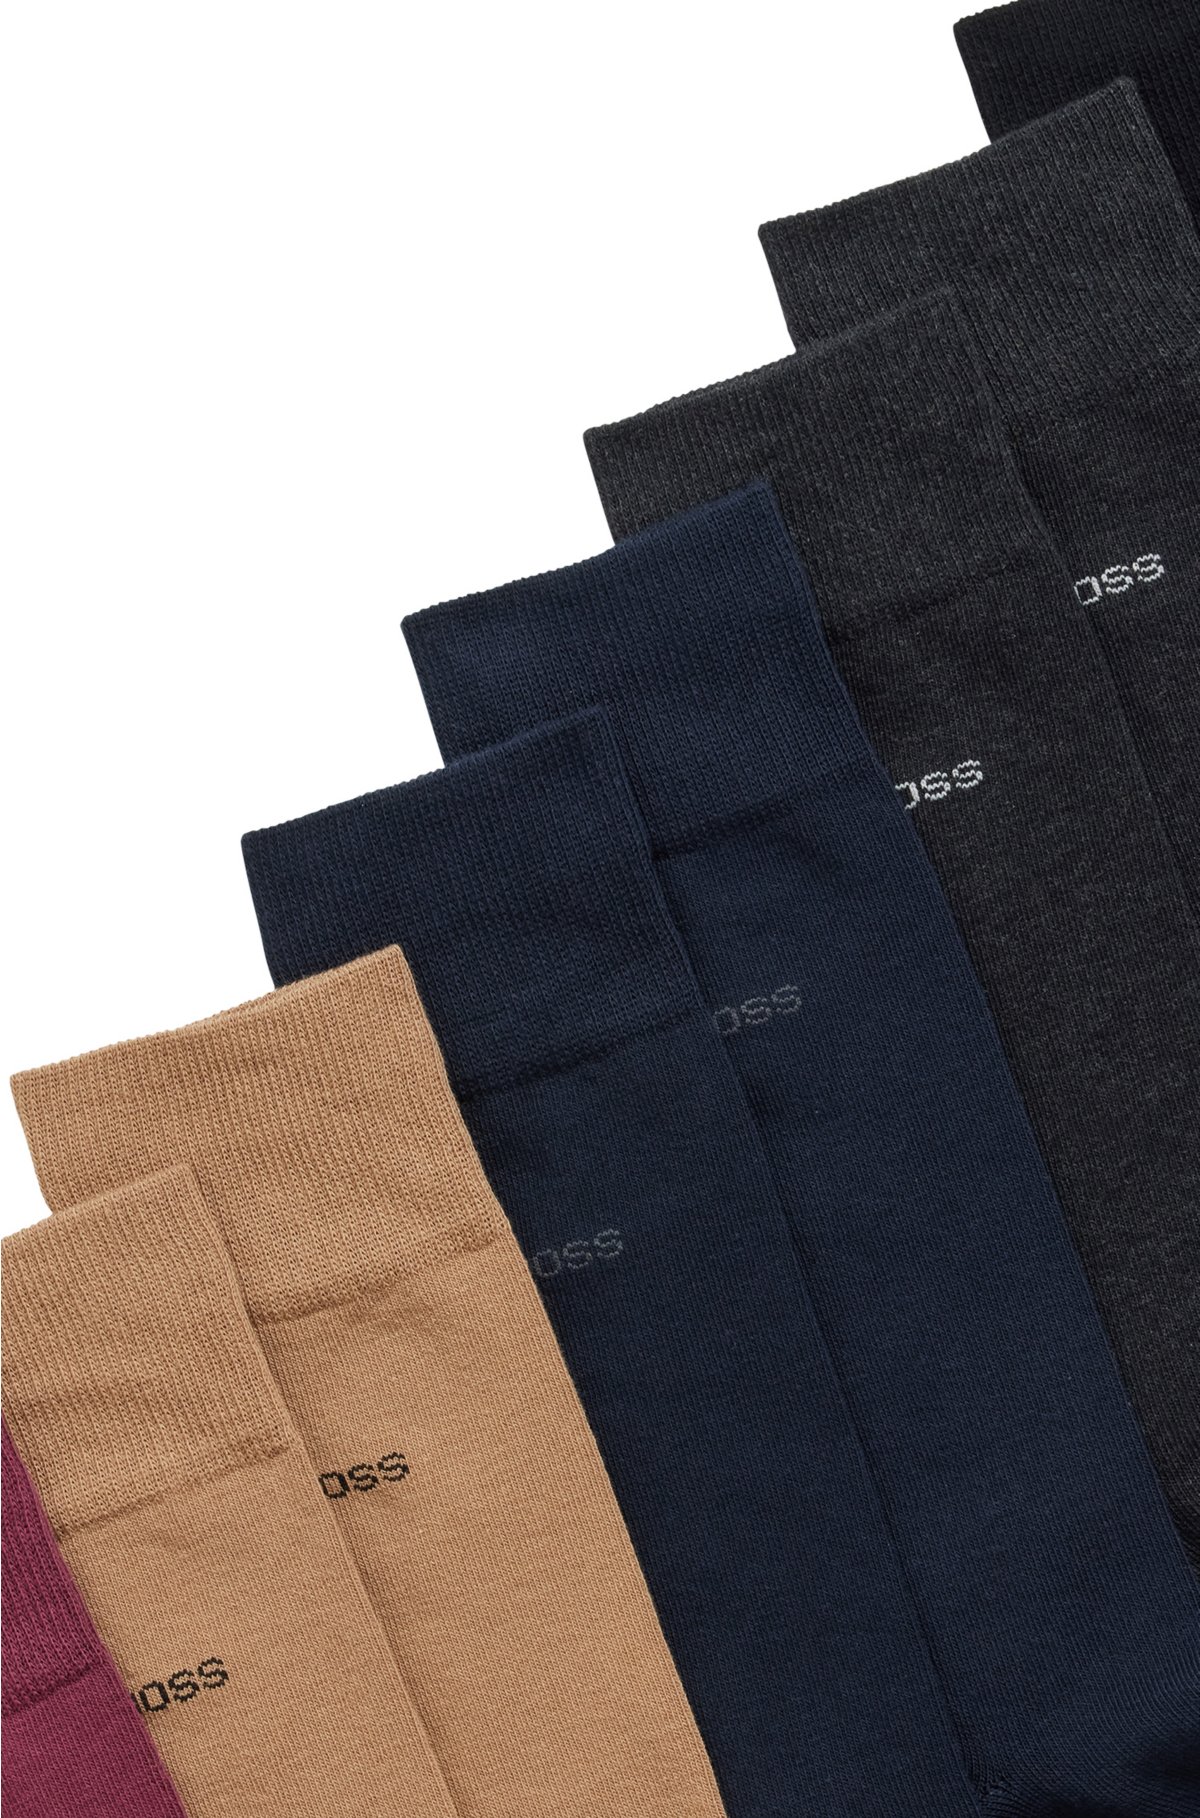 BOSS cotton a Five-pack blend of - in socks regular-length